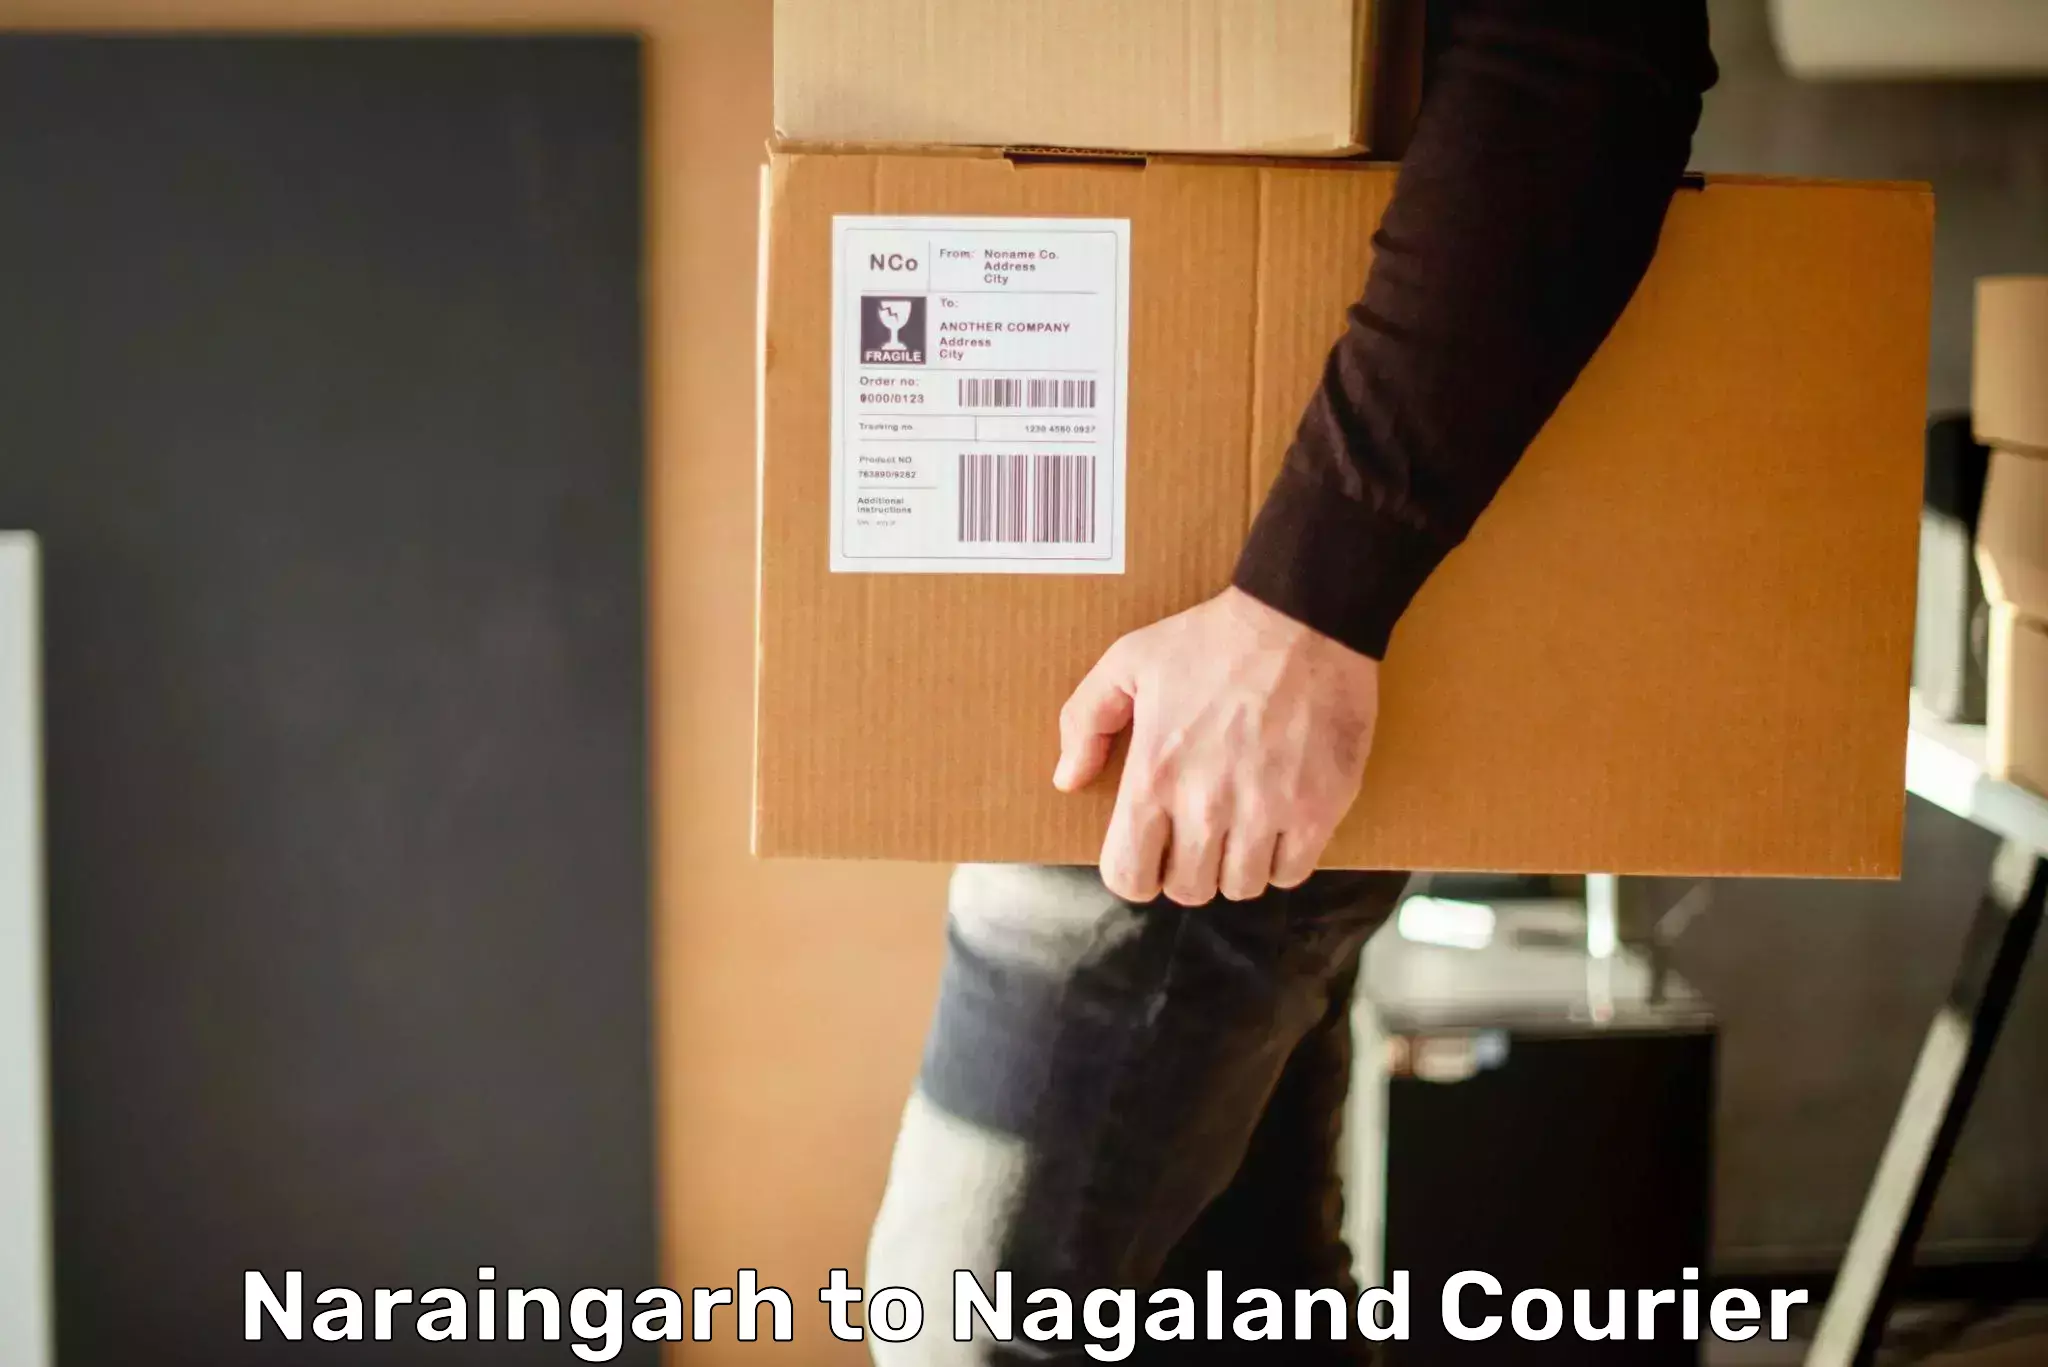 Digital courier platforms Naraingarh to Mon